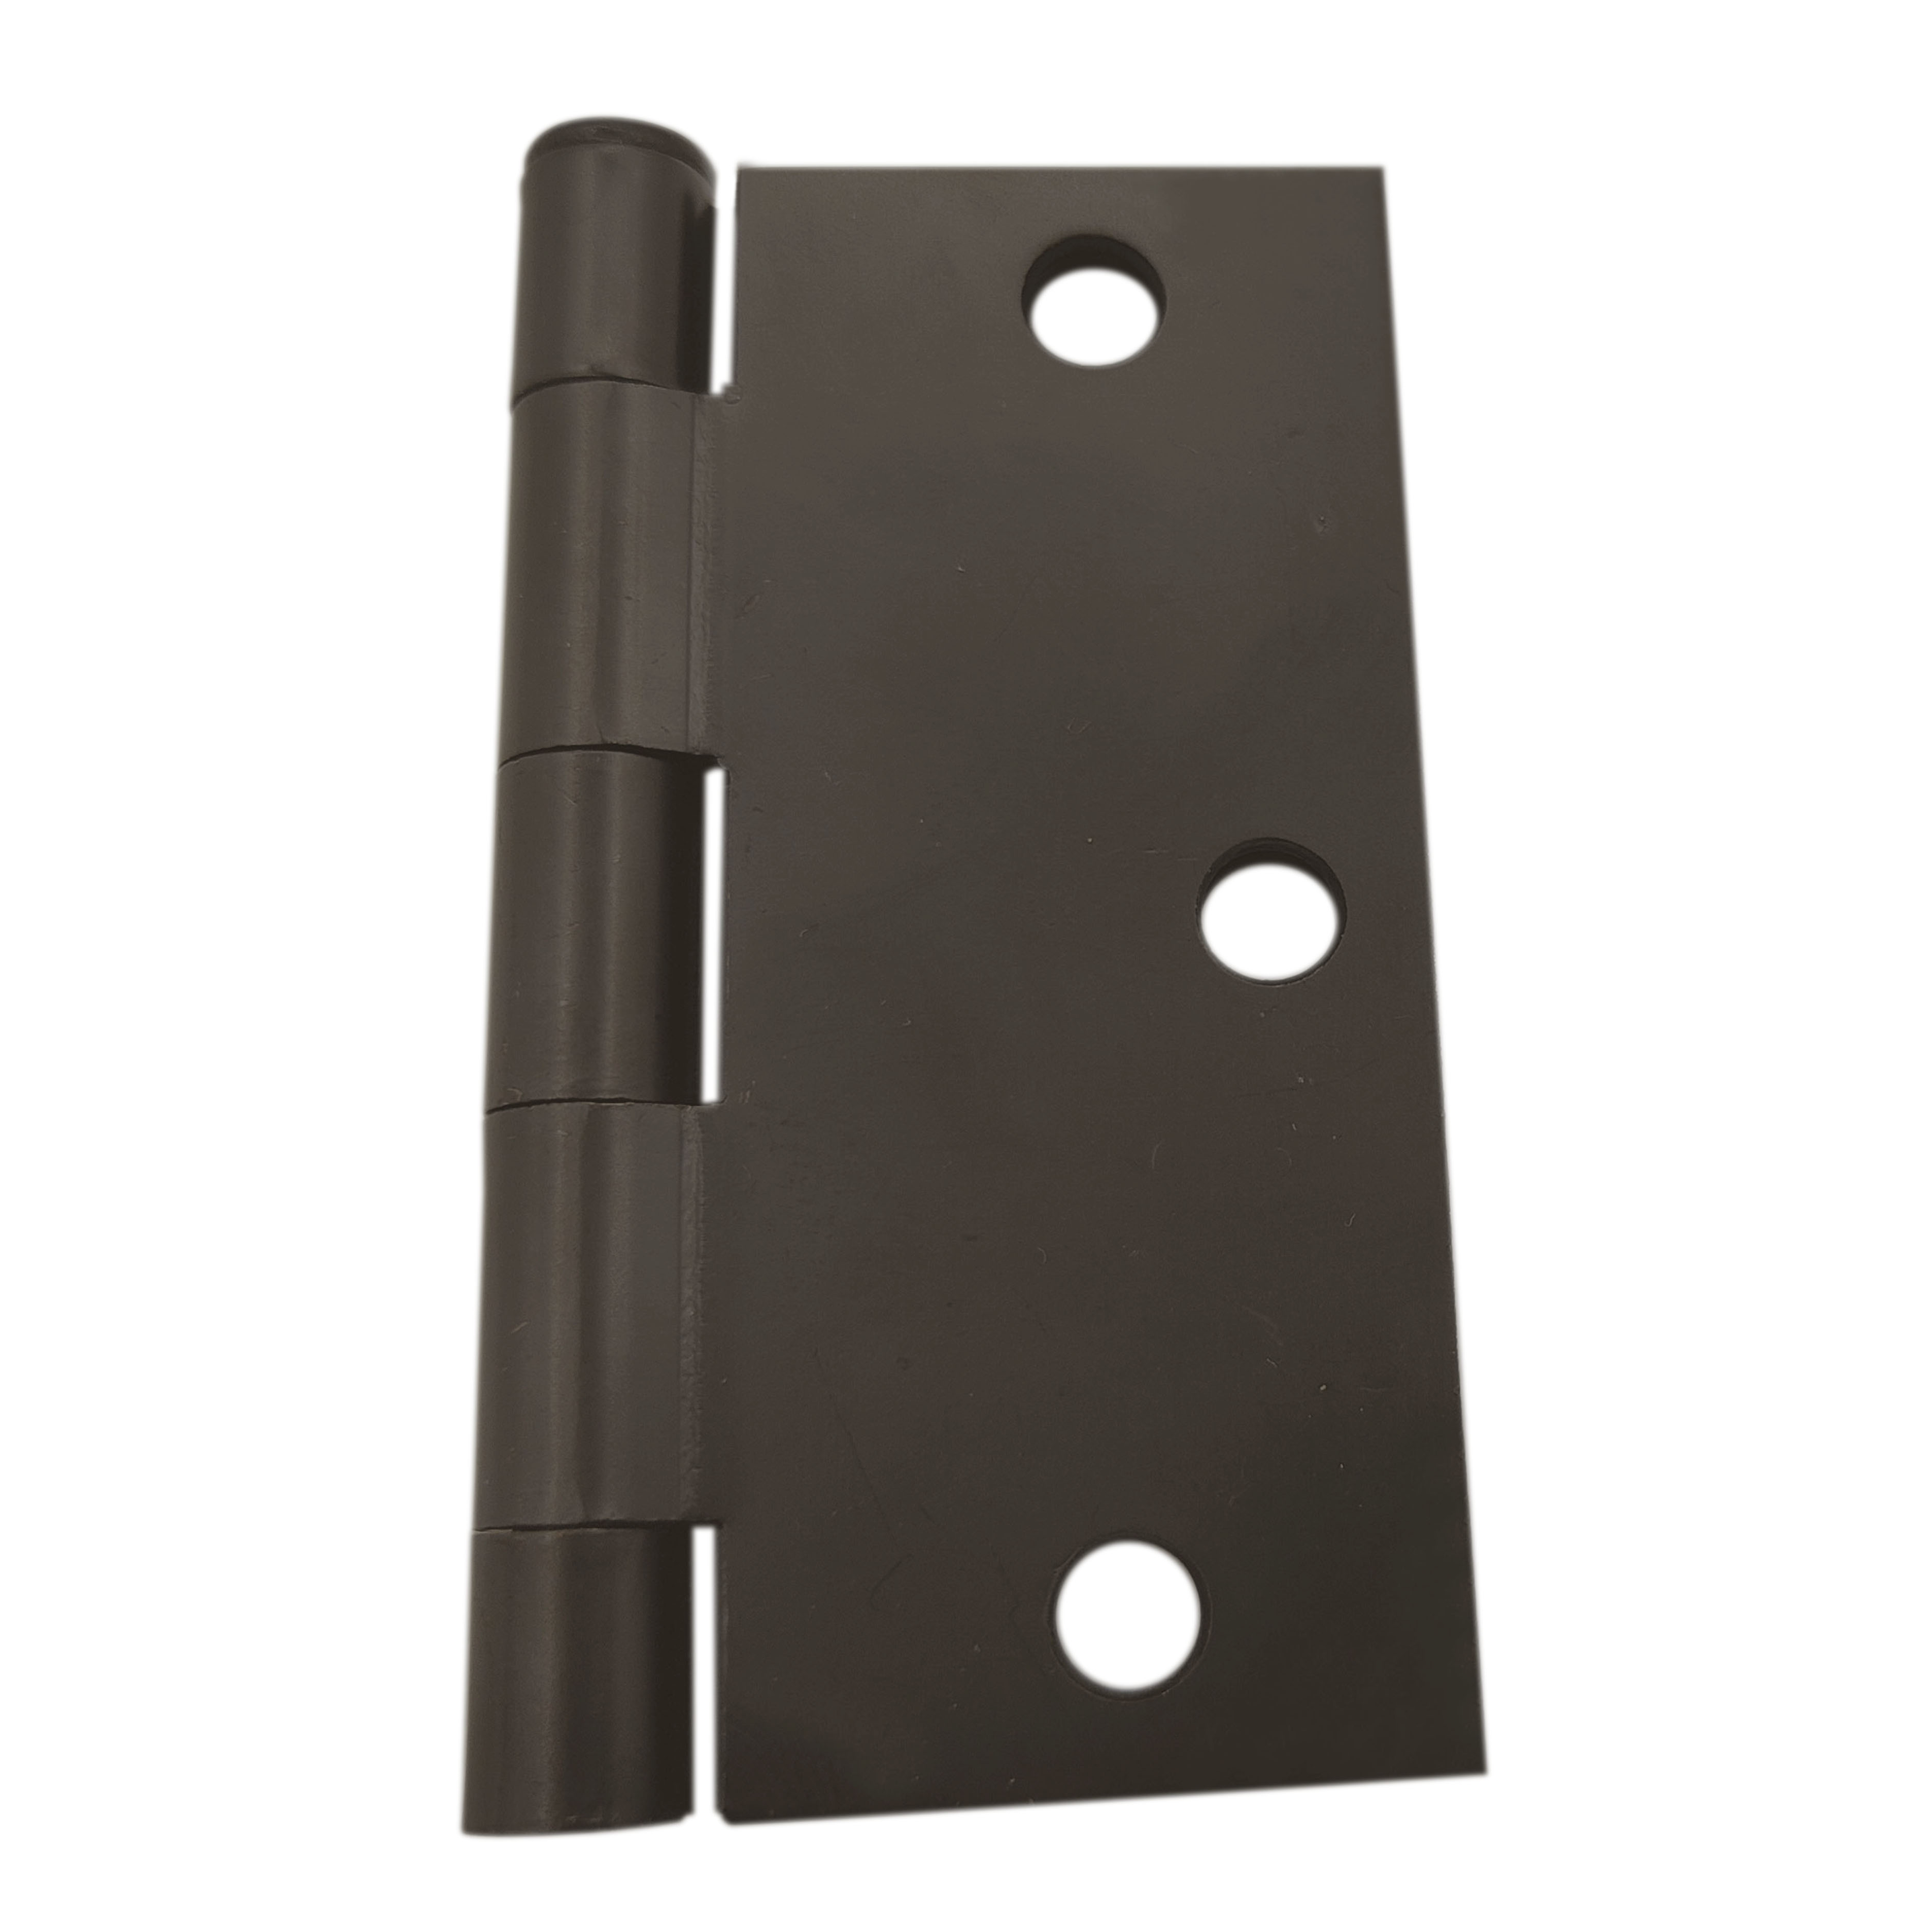 50pair(100pcs)Steel door hinge 3-1/2"Square corner, oil rubbed bronze,removable pin,door hinge, mobile home door hinge  and cabinet hinge,with screws - image 4 of 5